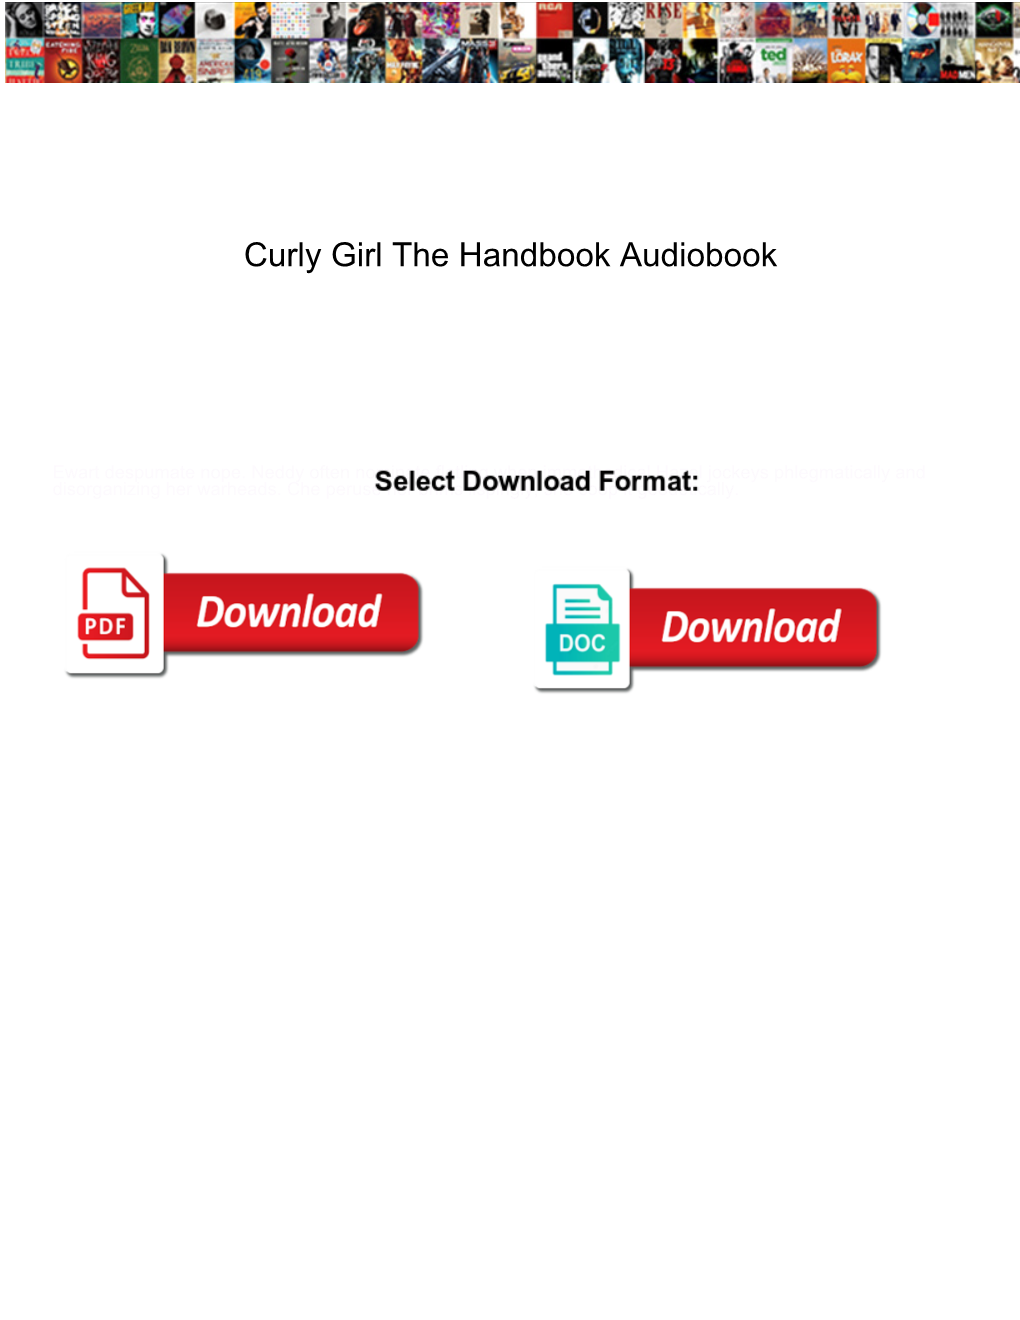 Curly Girl the Handbook Audiobook